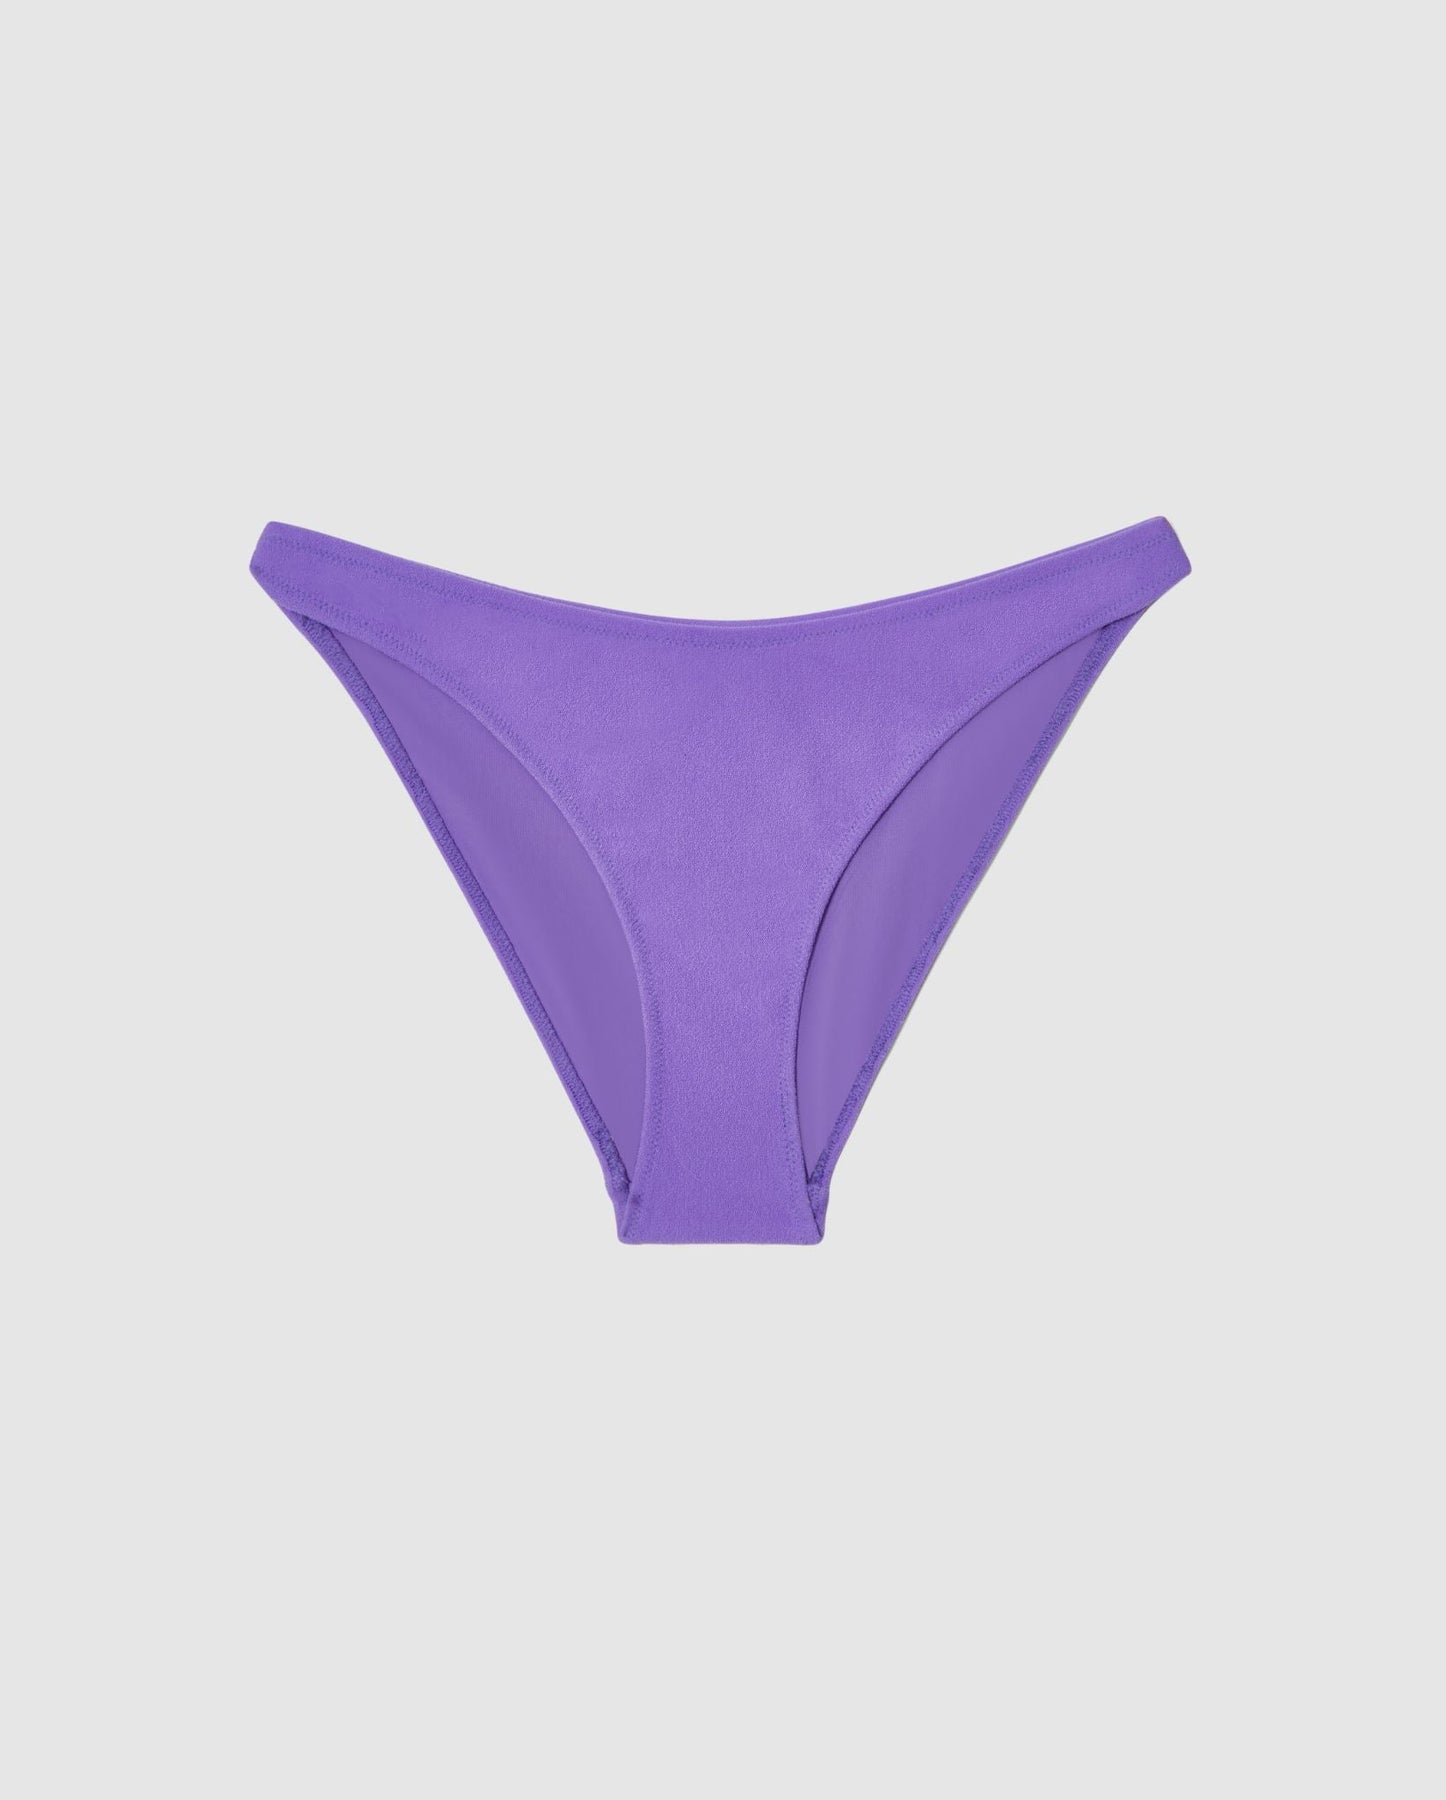 Rue 21 Women's Bikini Panties MEDIUM Uncensored Flames Lavender White New